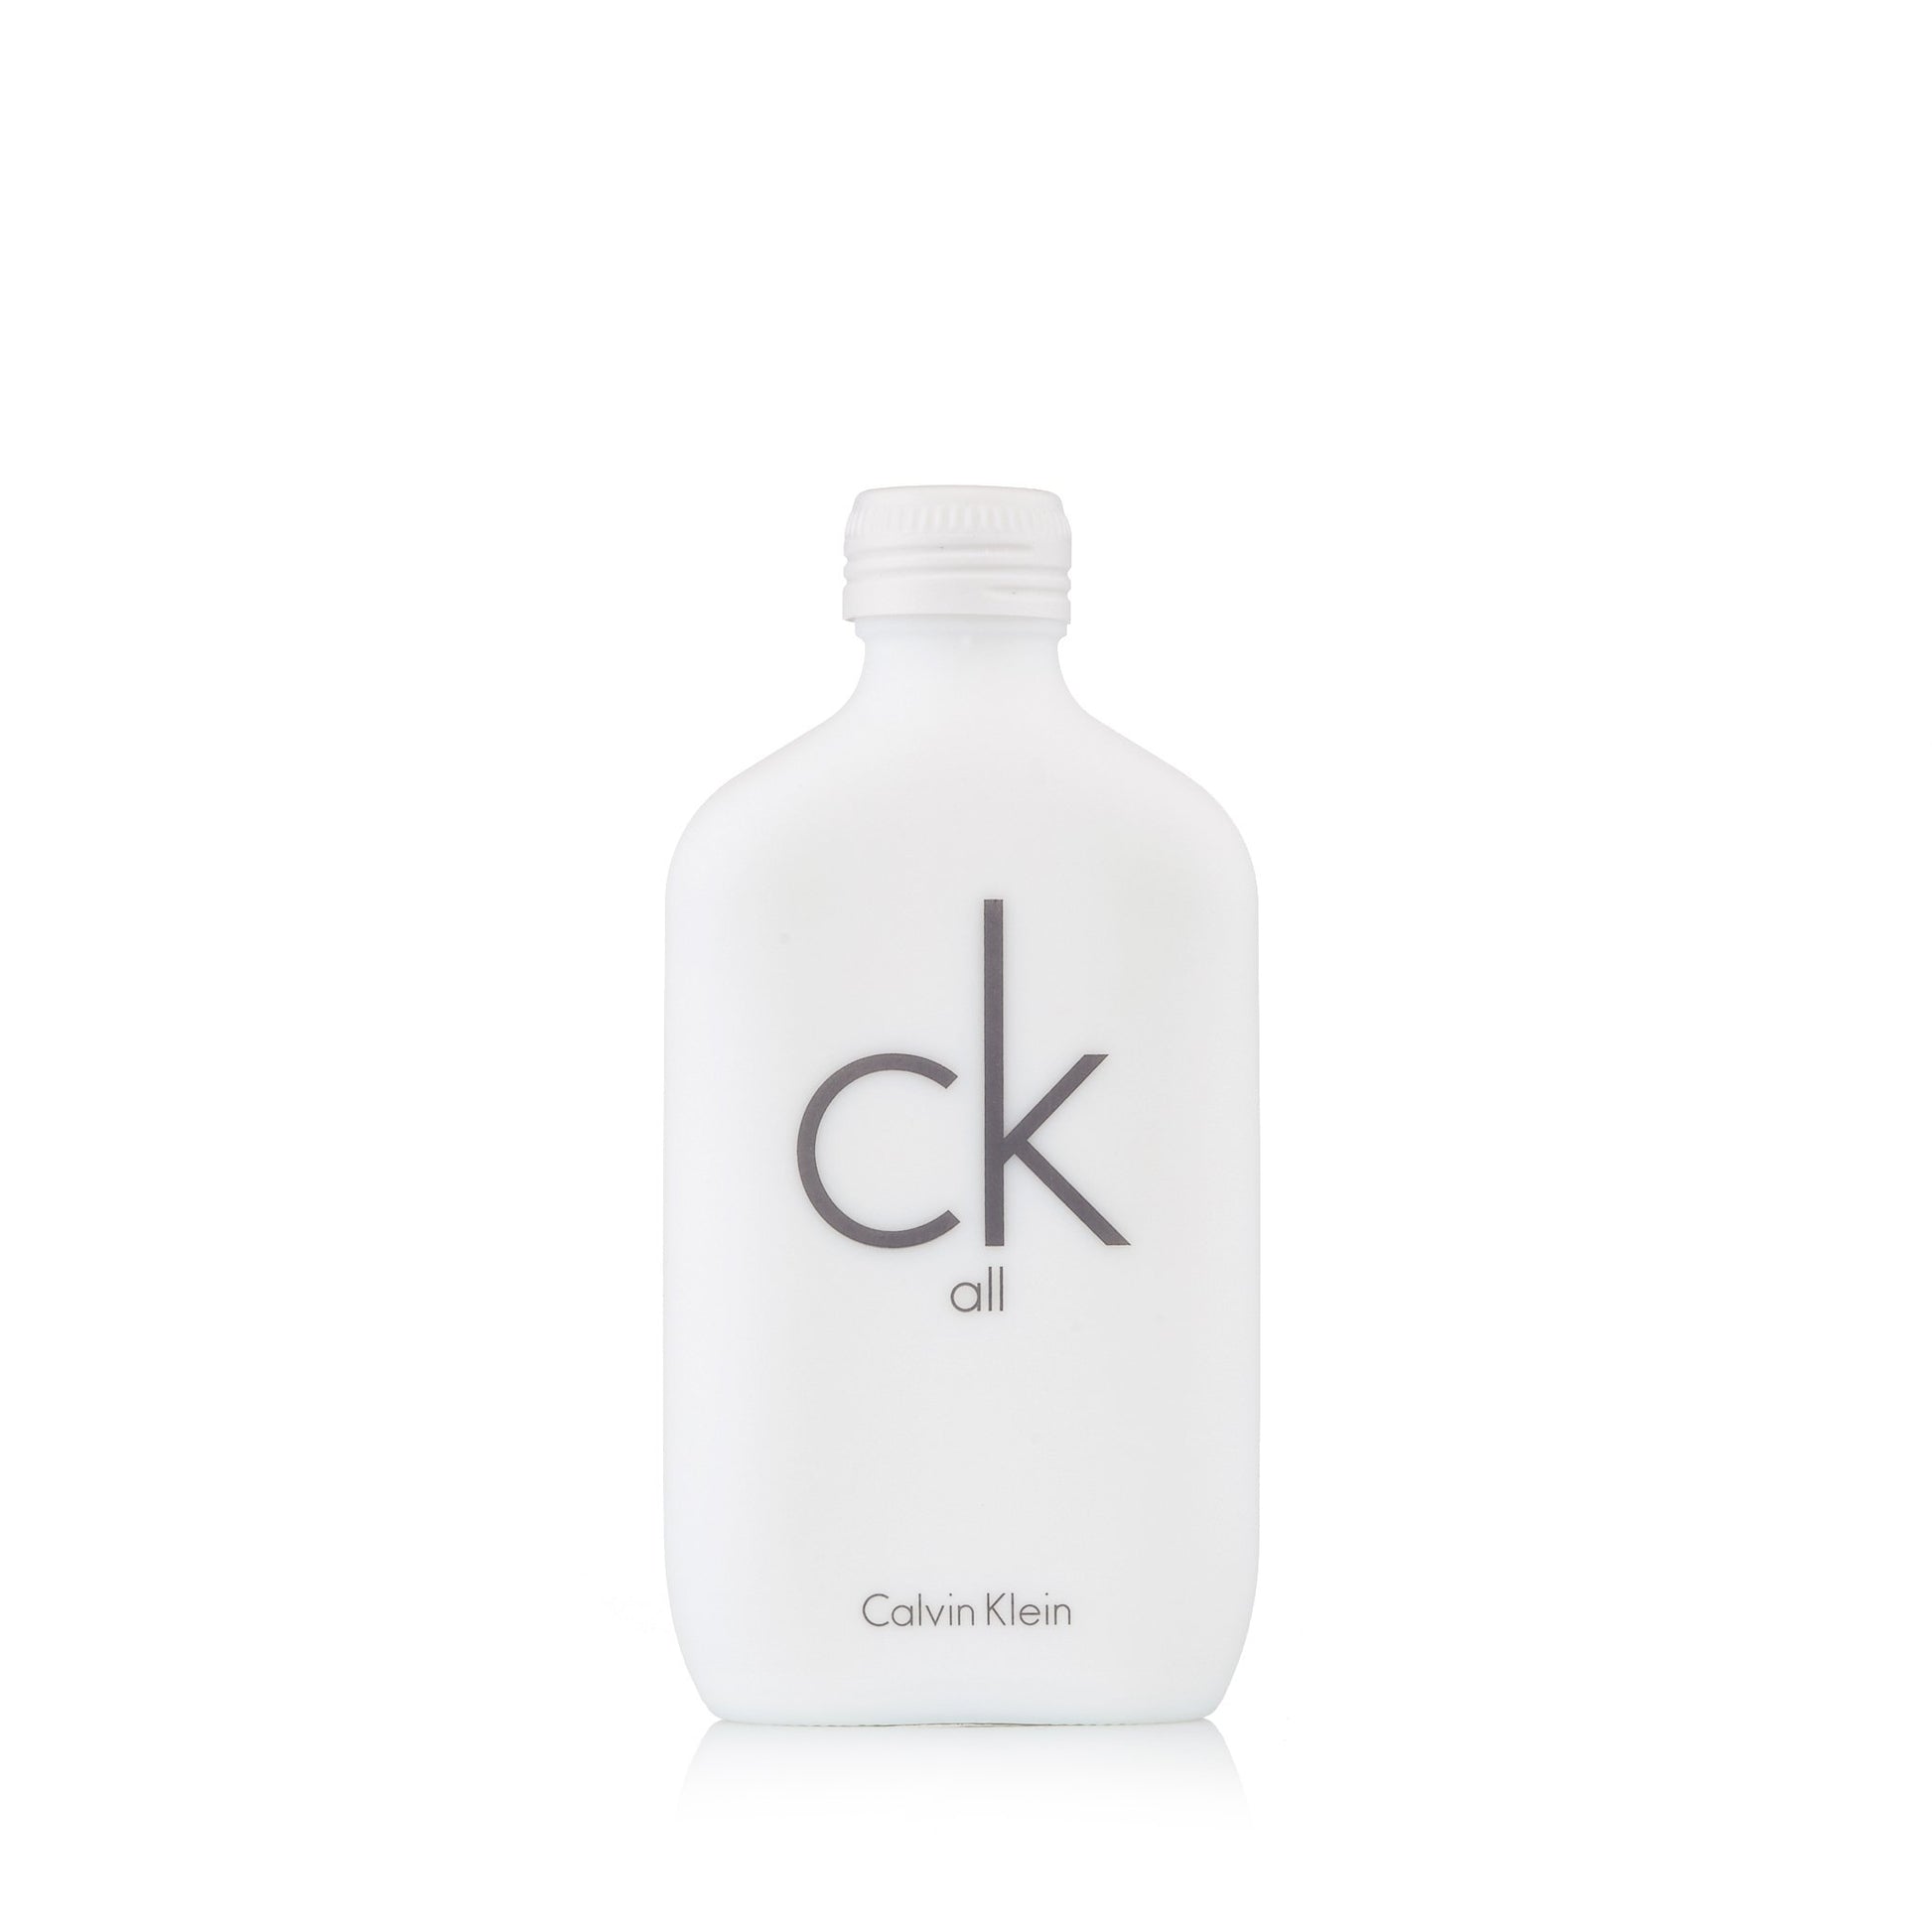 CK All Eau de Toilette Spray for Women and Men by Calvin Klein, Product image 1